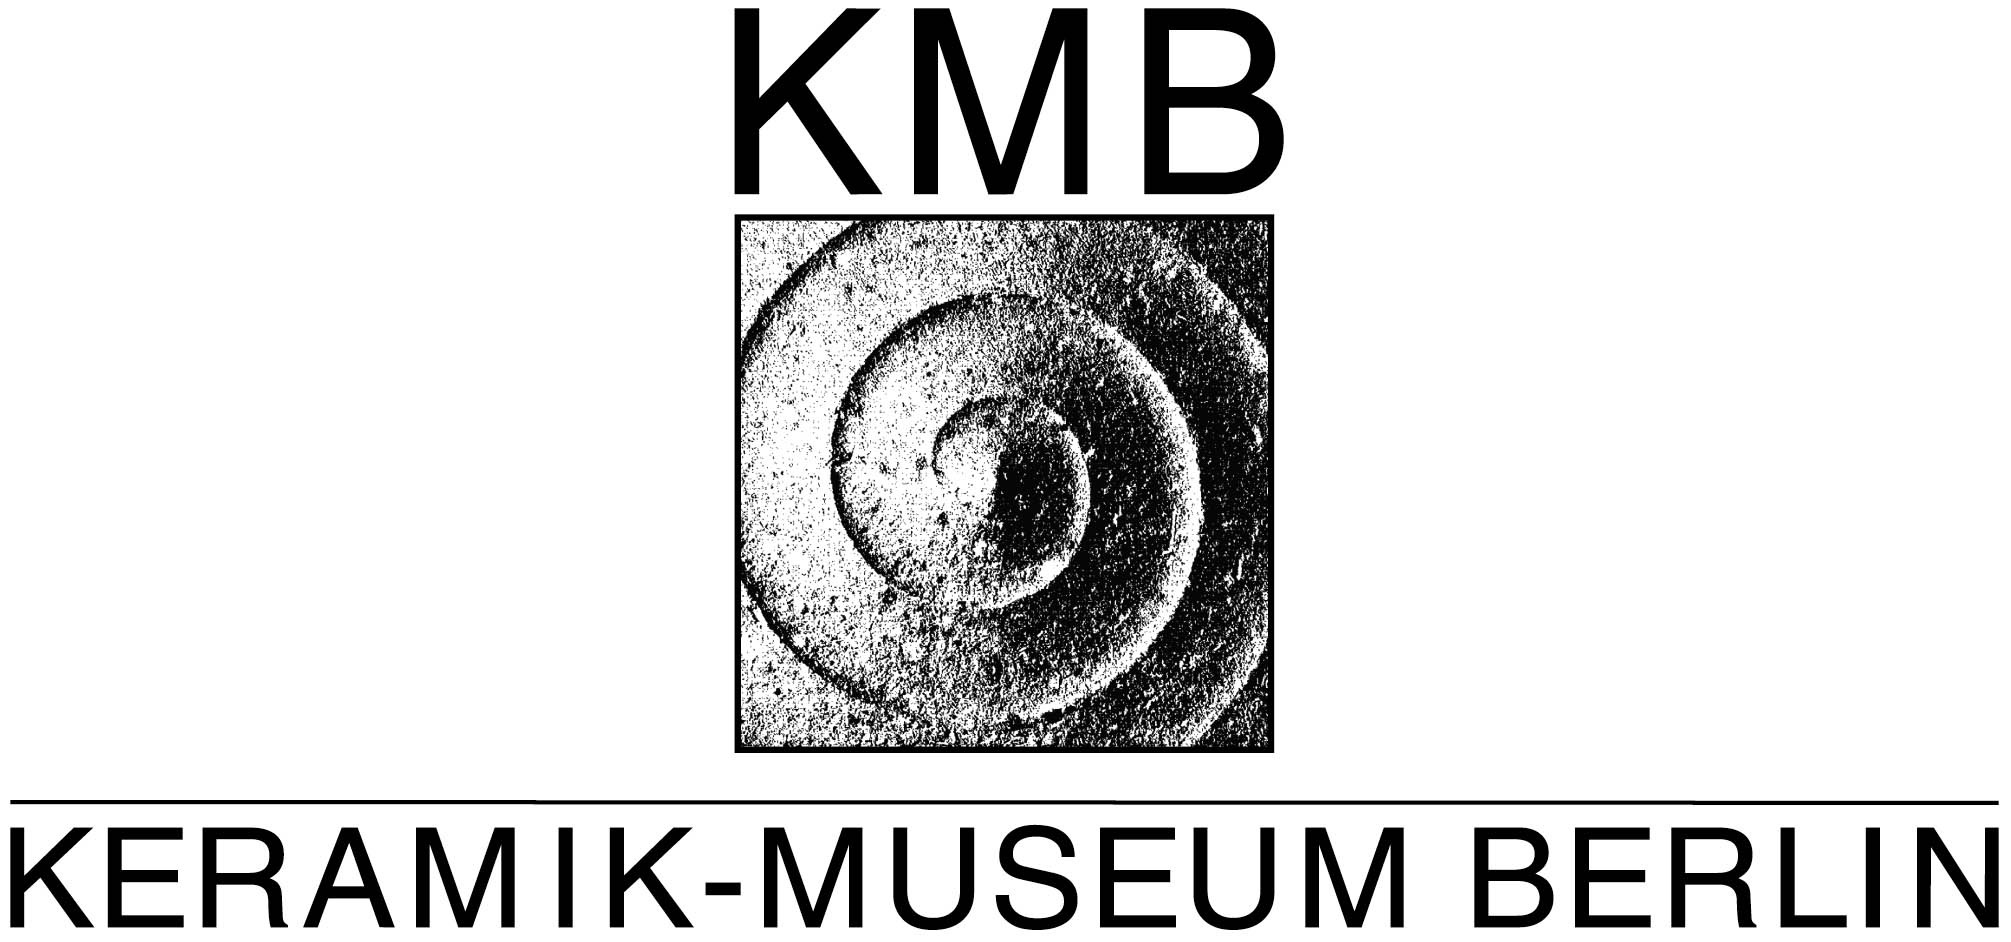 Keramik museum logo 300dpi